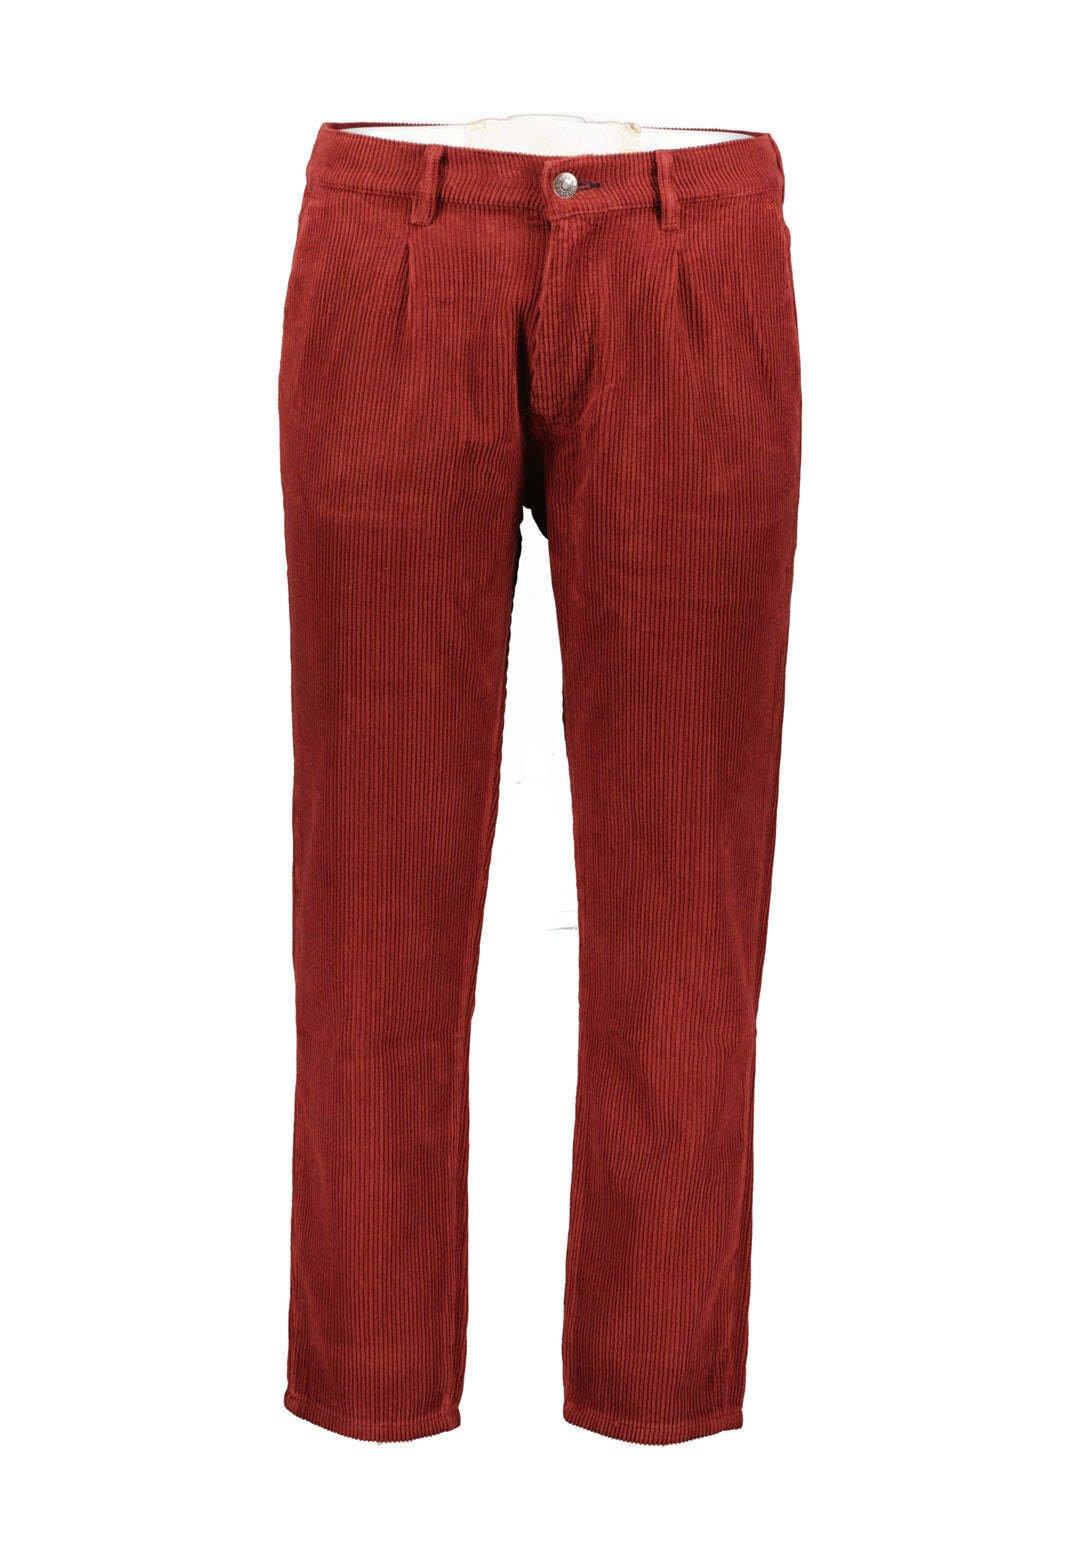 Hosen Pants-corduroy Herren Rot Bunt W33 von Colours & Sons